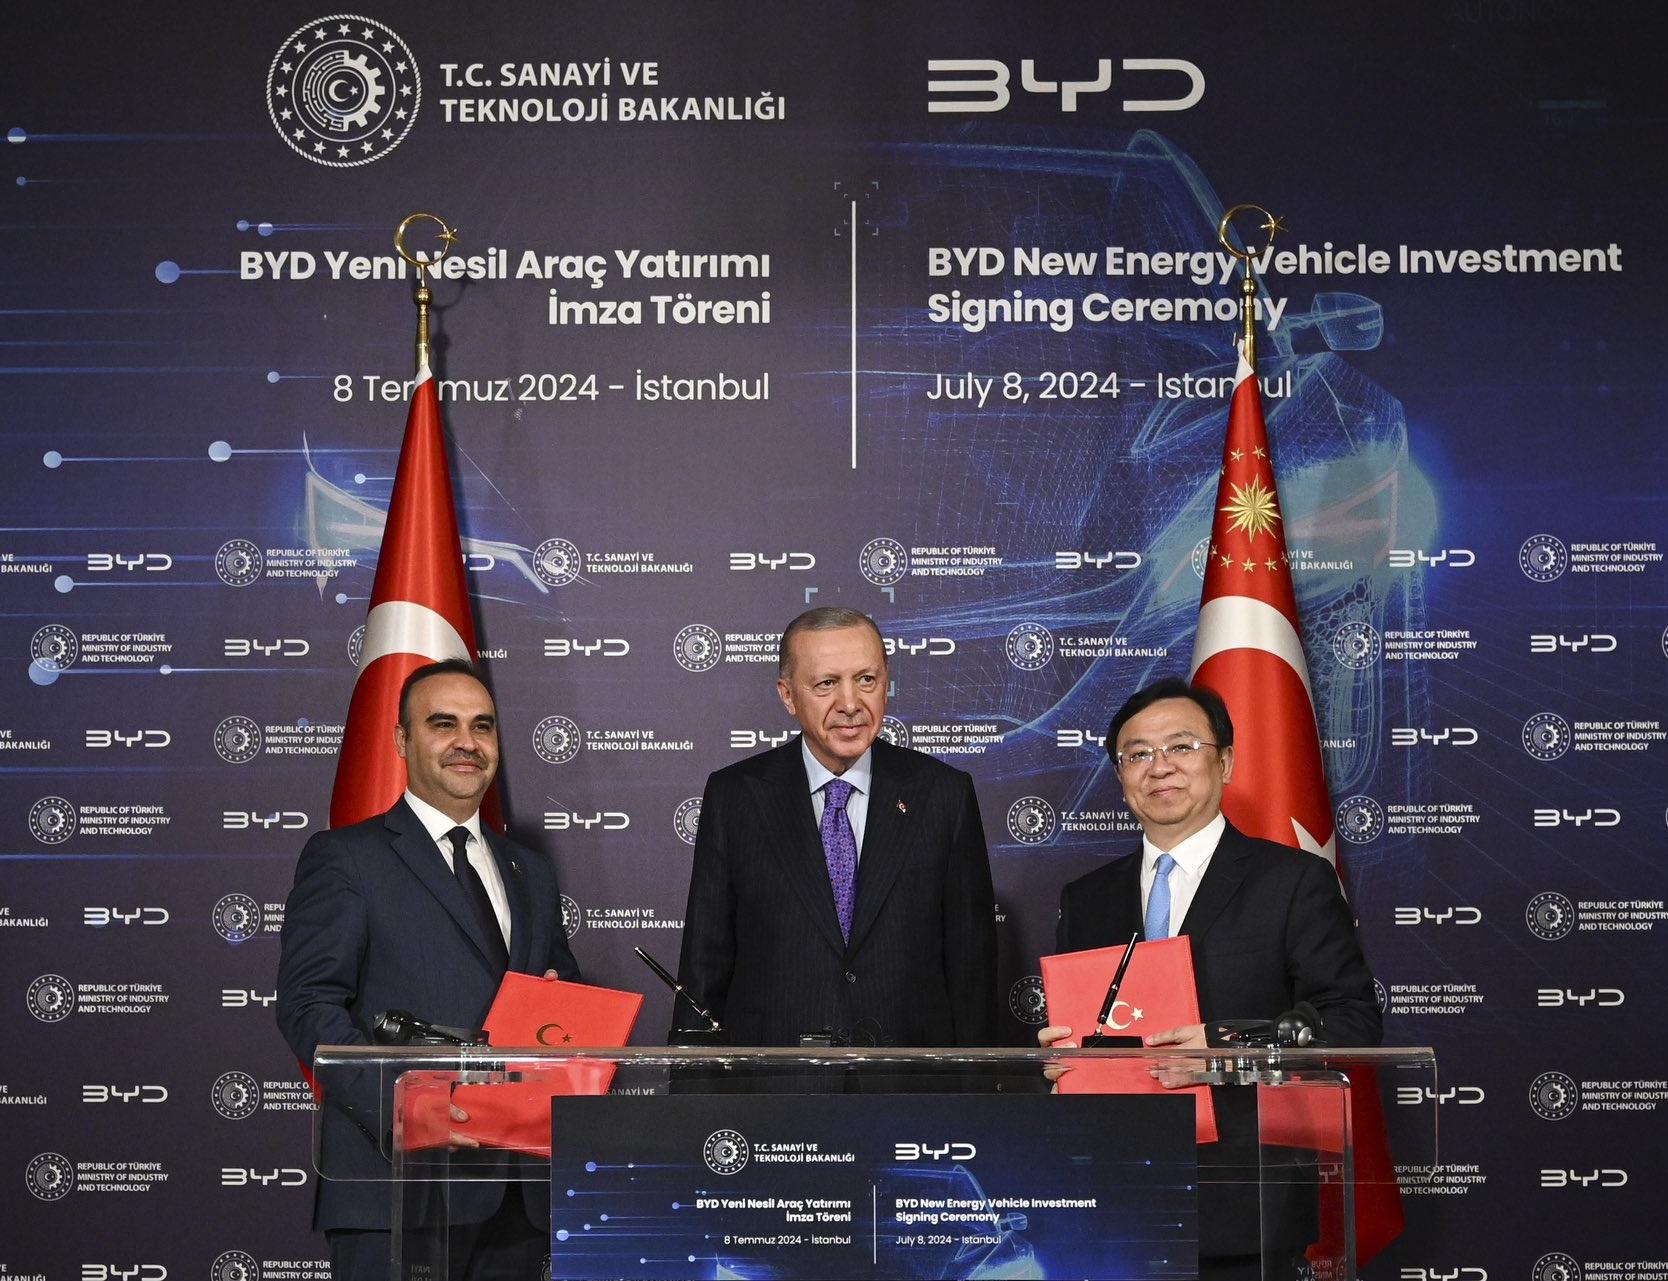 BYD Turkey Investment